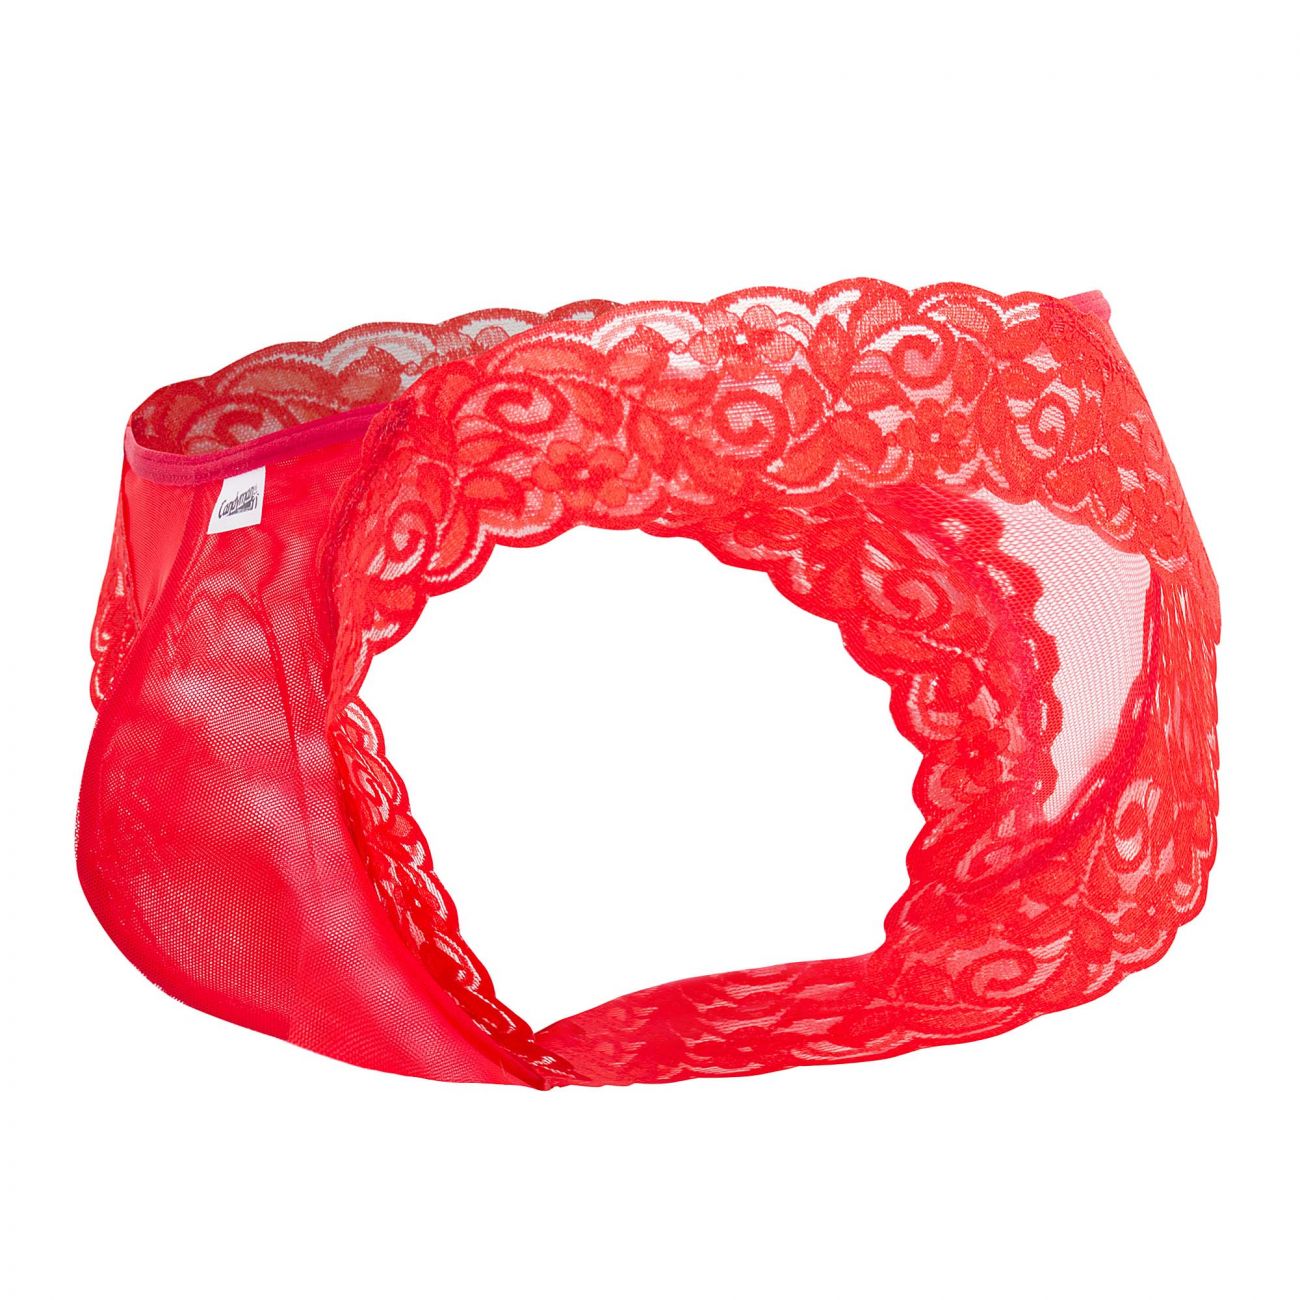 JCSTK - CandyMan 99506 Mesh-Lace Thongs Red